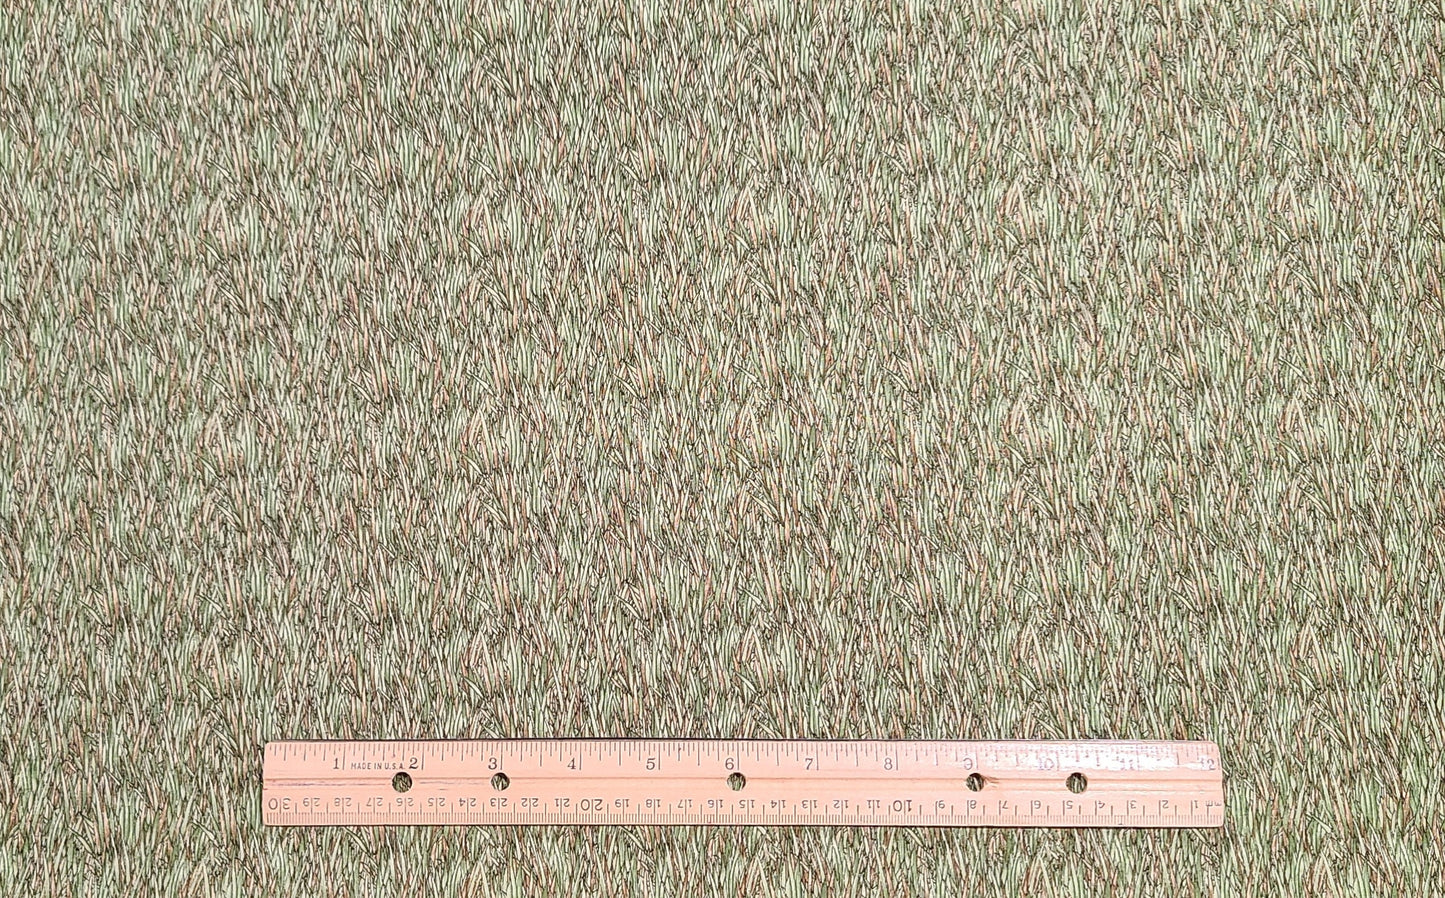 Patt# BTR-4794 Blank Quilting 2007 - Green, Cream and Tan "Grass" Print Fabric